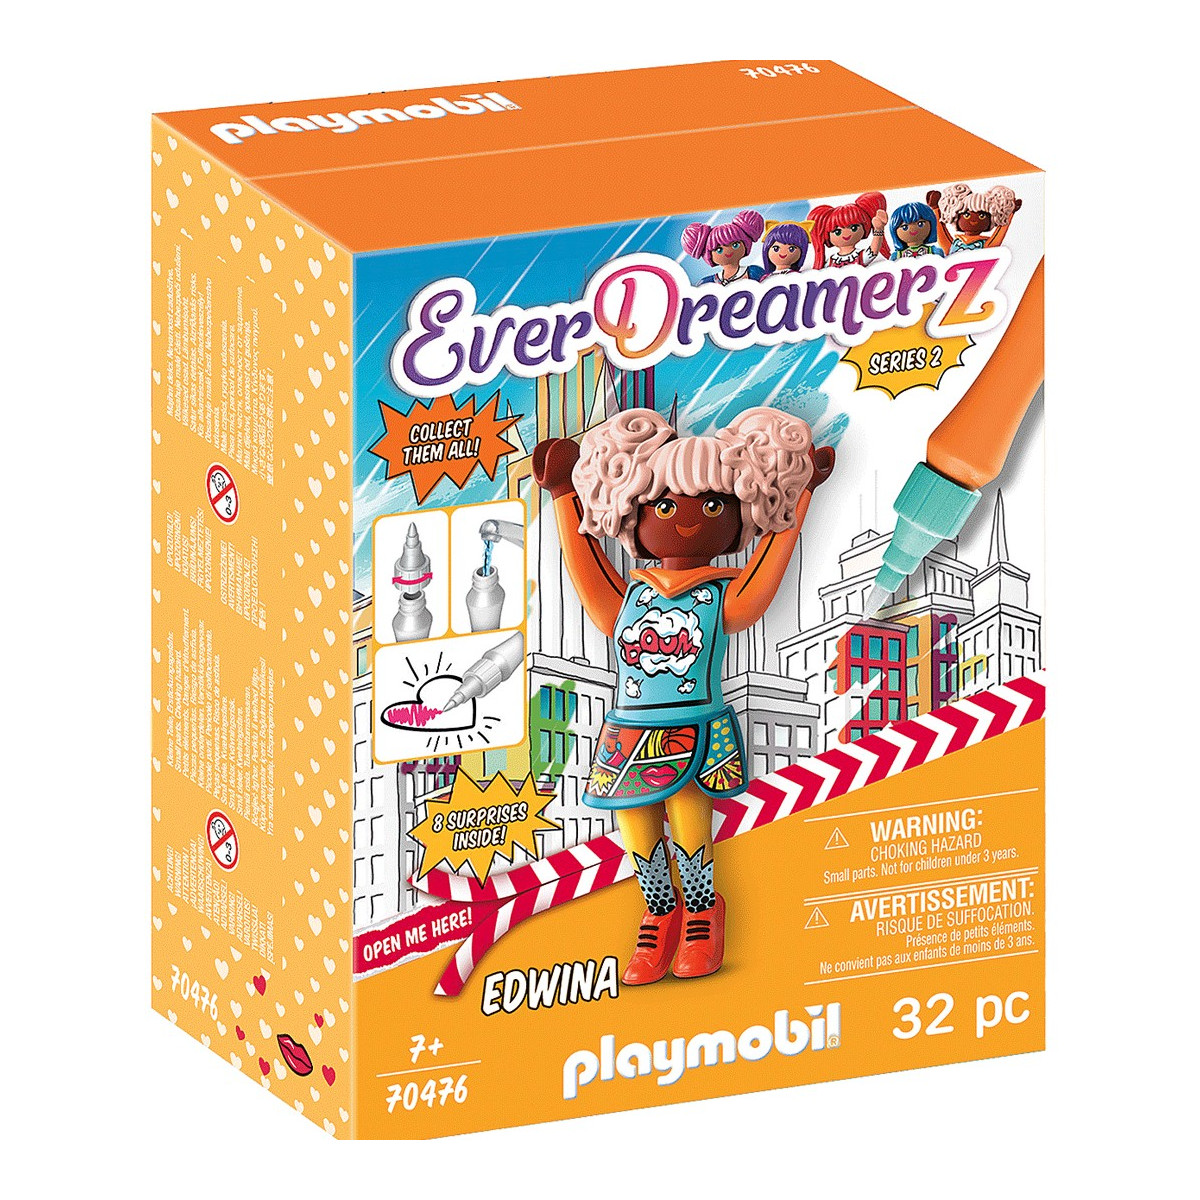 Everdreamerz playmobil edwina en boîte avec accessoires